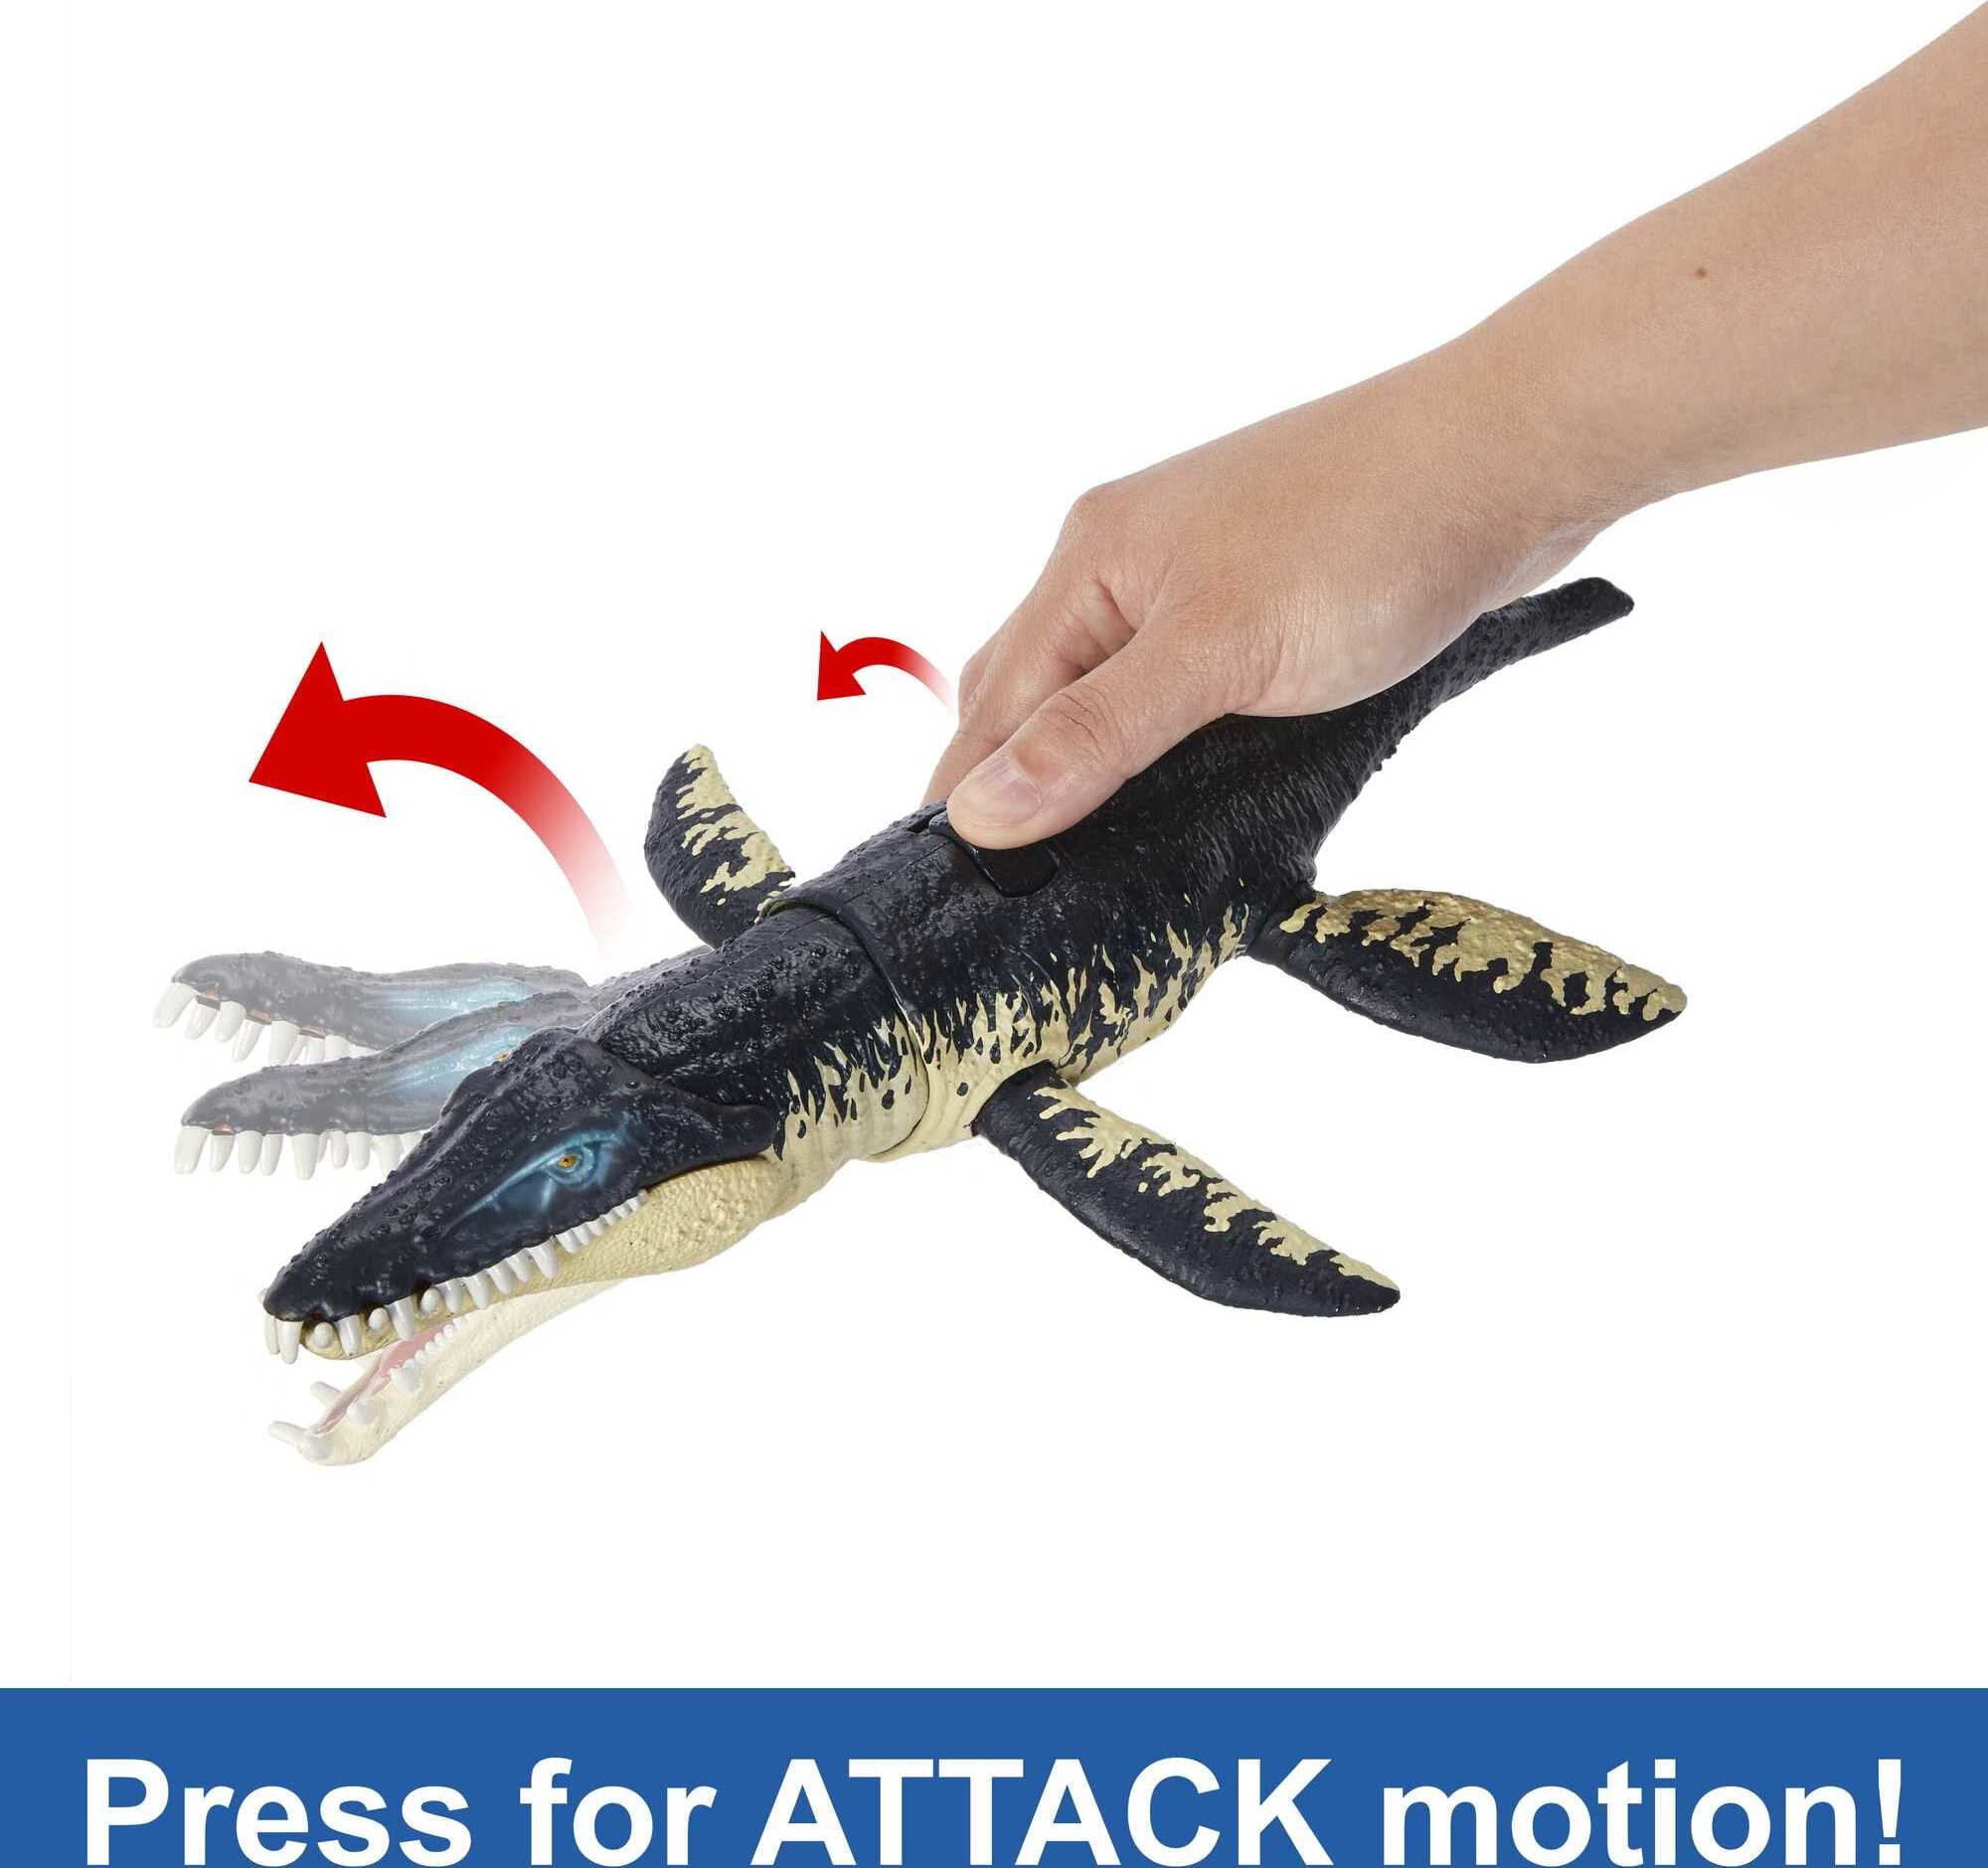 Mattel Jurassic World Ocean Protector Mosasaurus • Price »